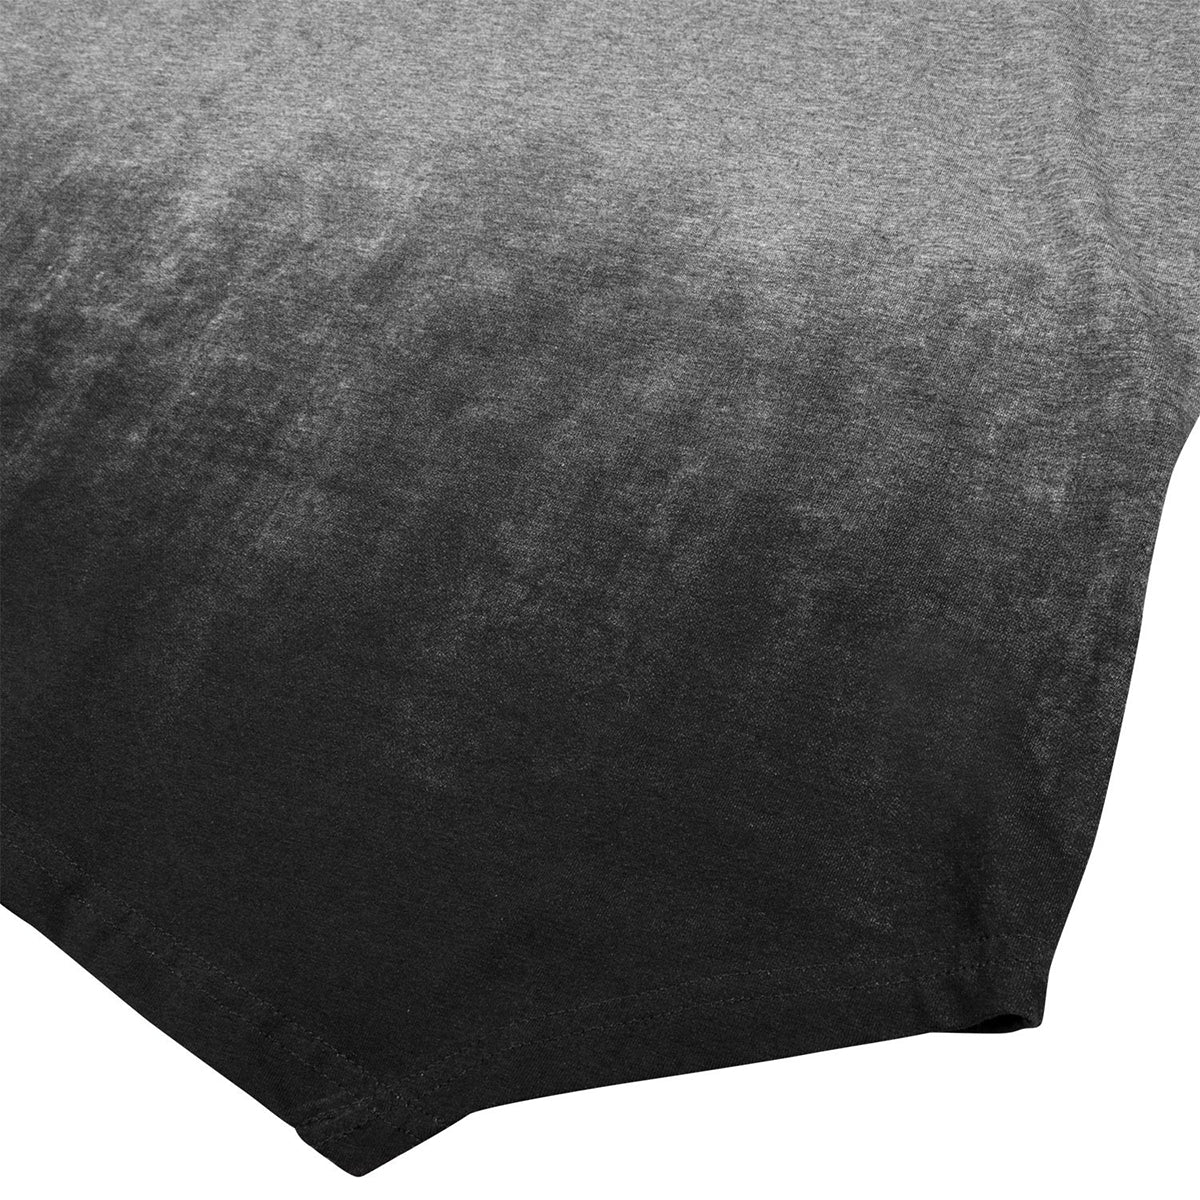 Venum Interference 2.0 Short Sleeve T-Shirt - Heather Gray Venum